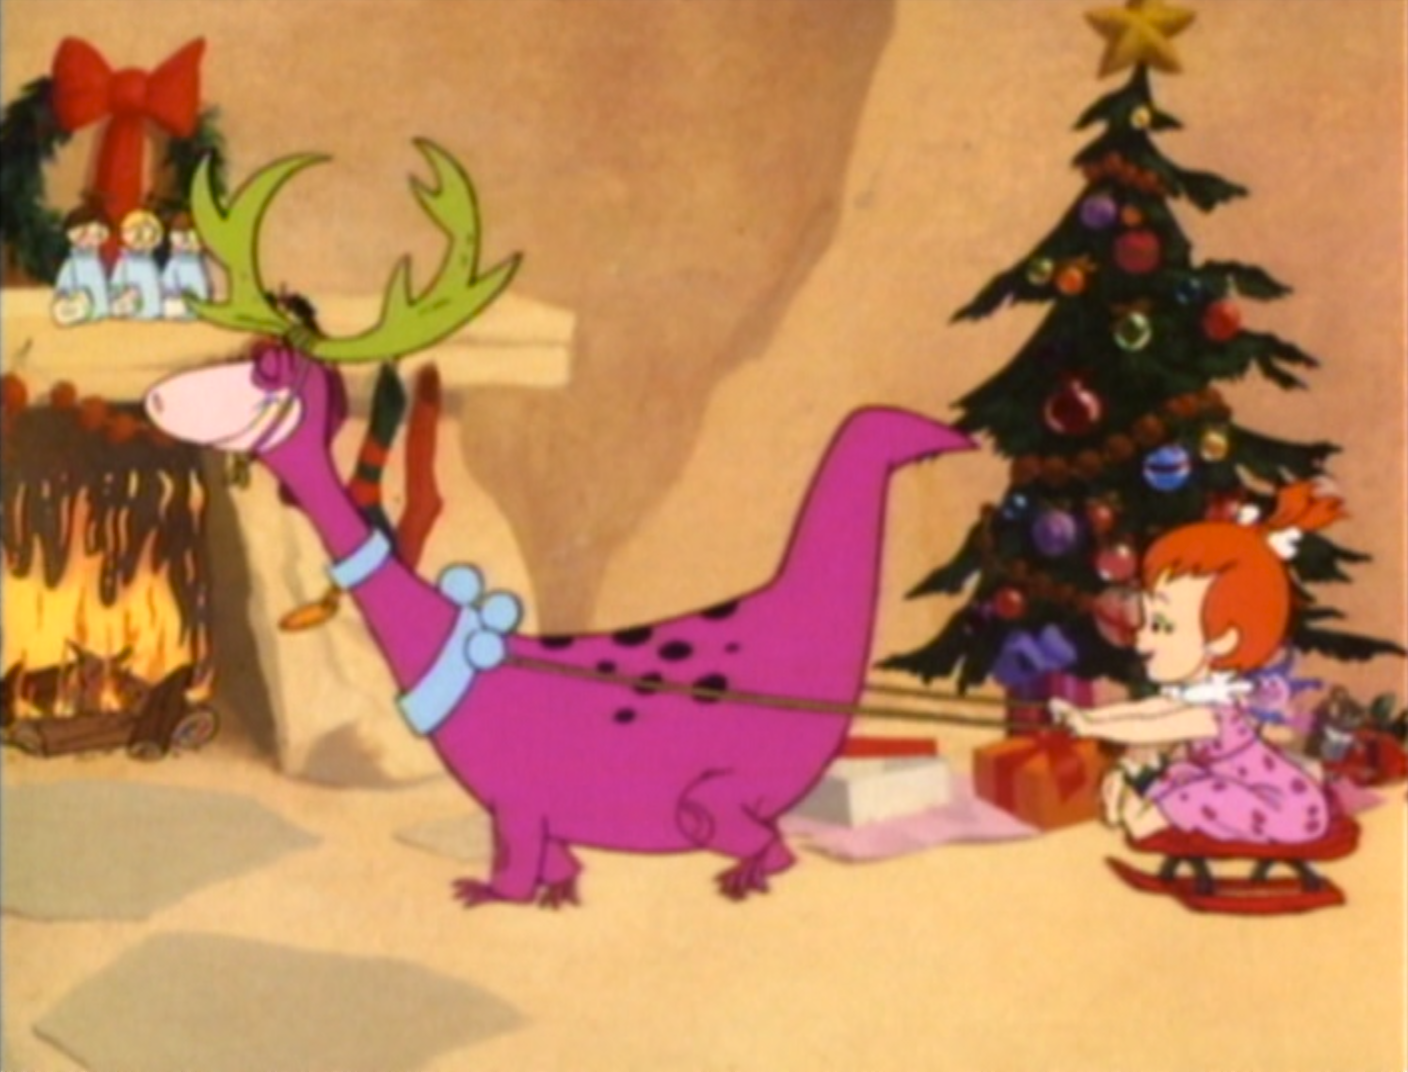 Holiday Film Reviews A Flintstone Christmas